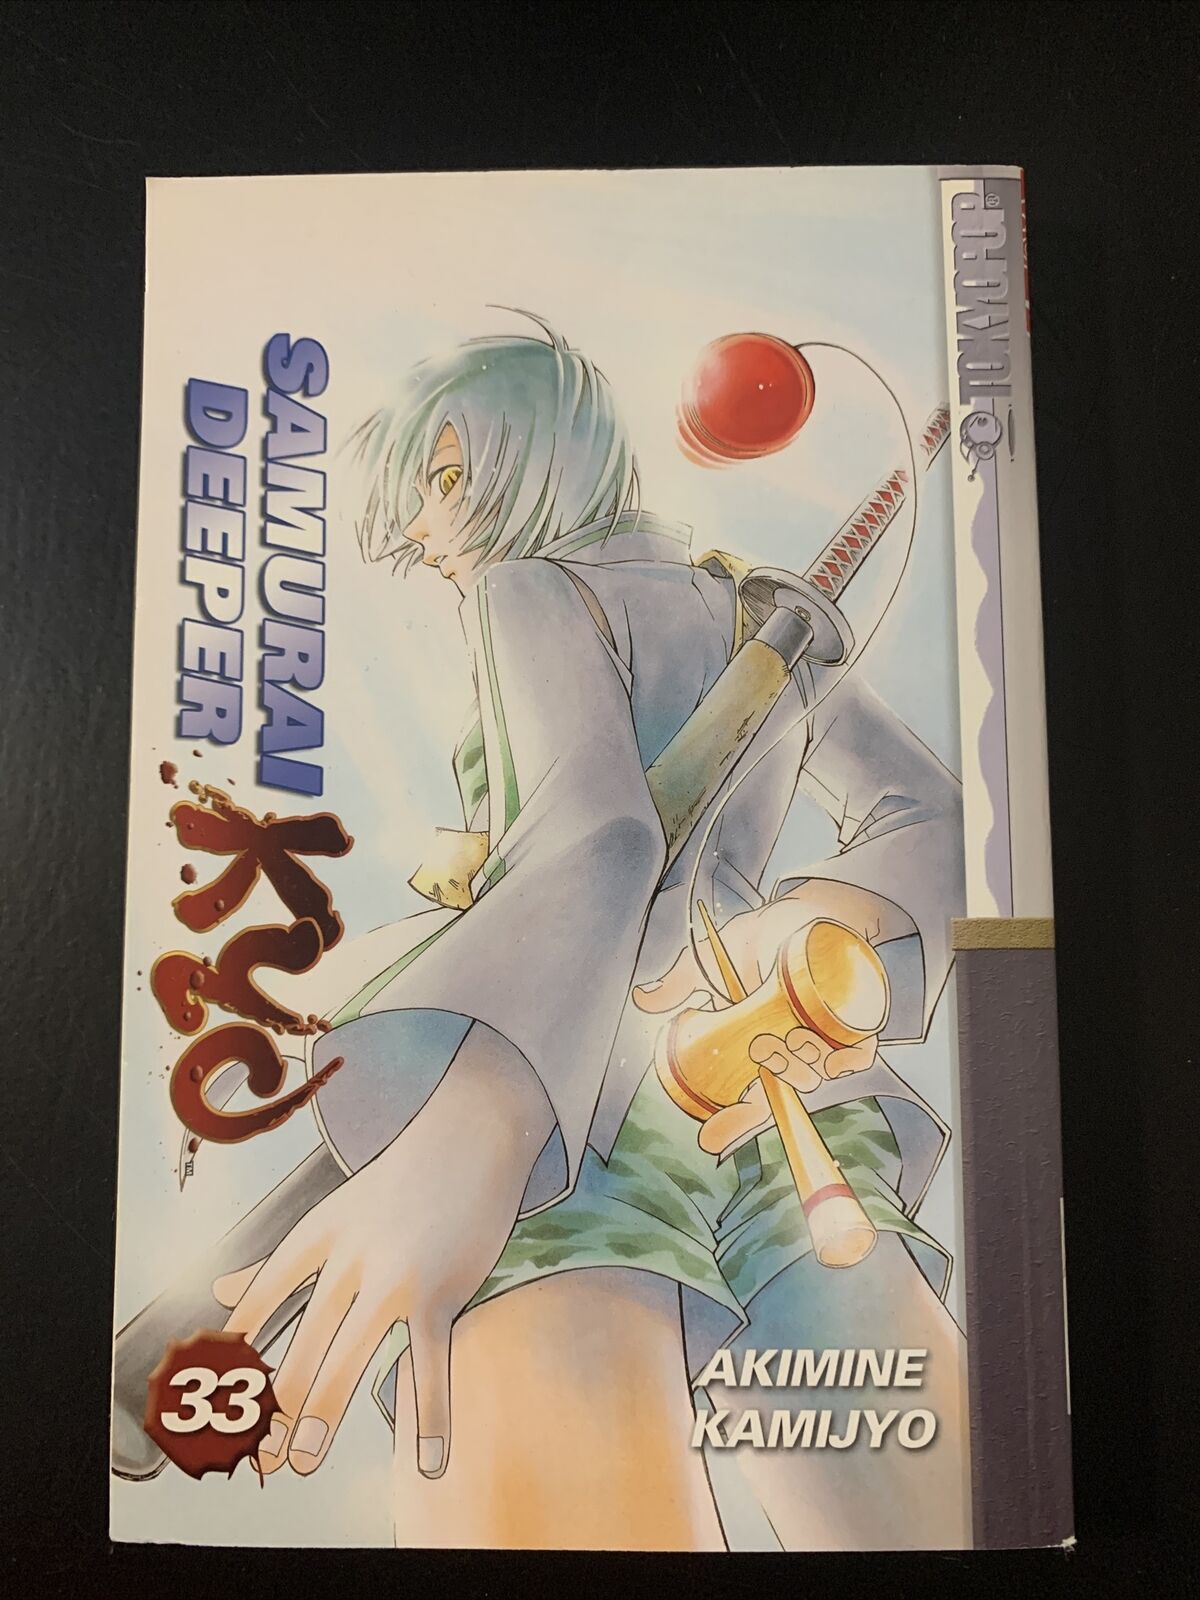 Samurai Deeper Kyo Vol 33 by Akimine Kamizyou Tokyopop Manga English